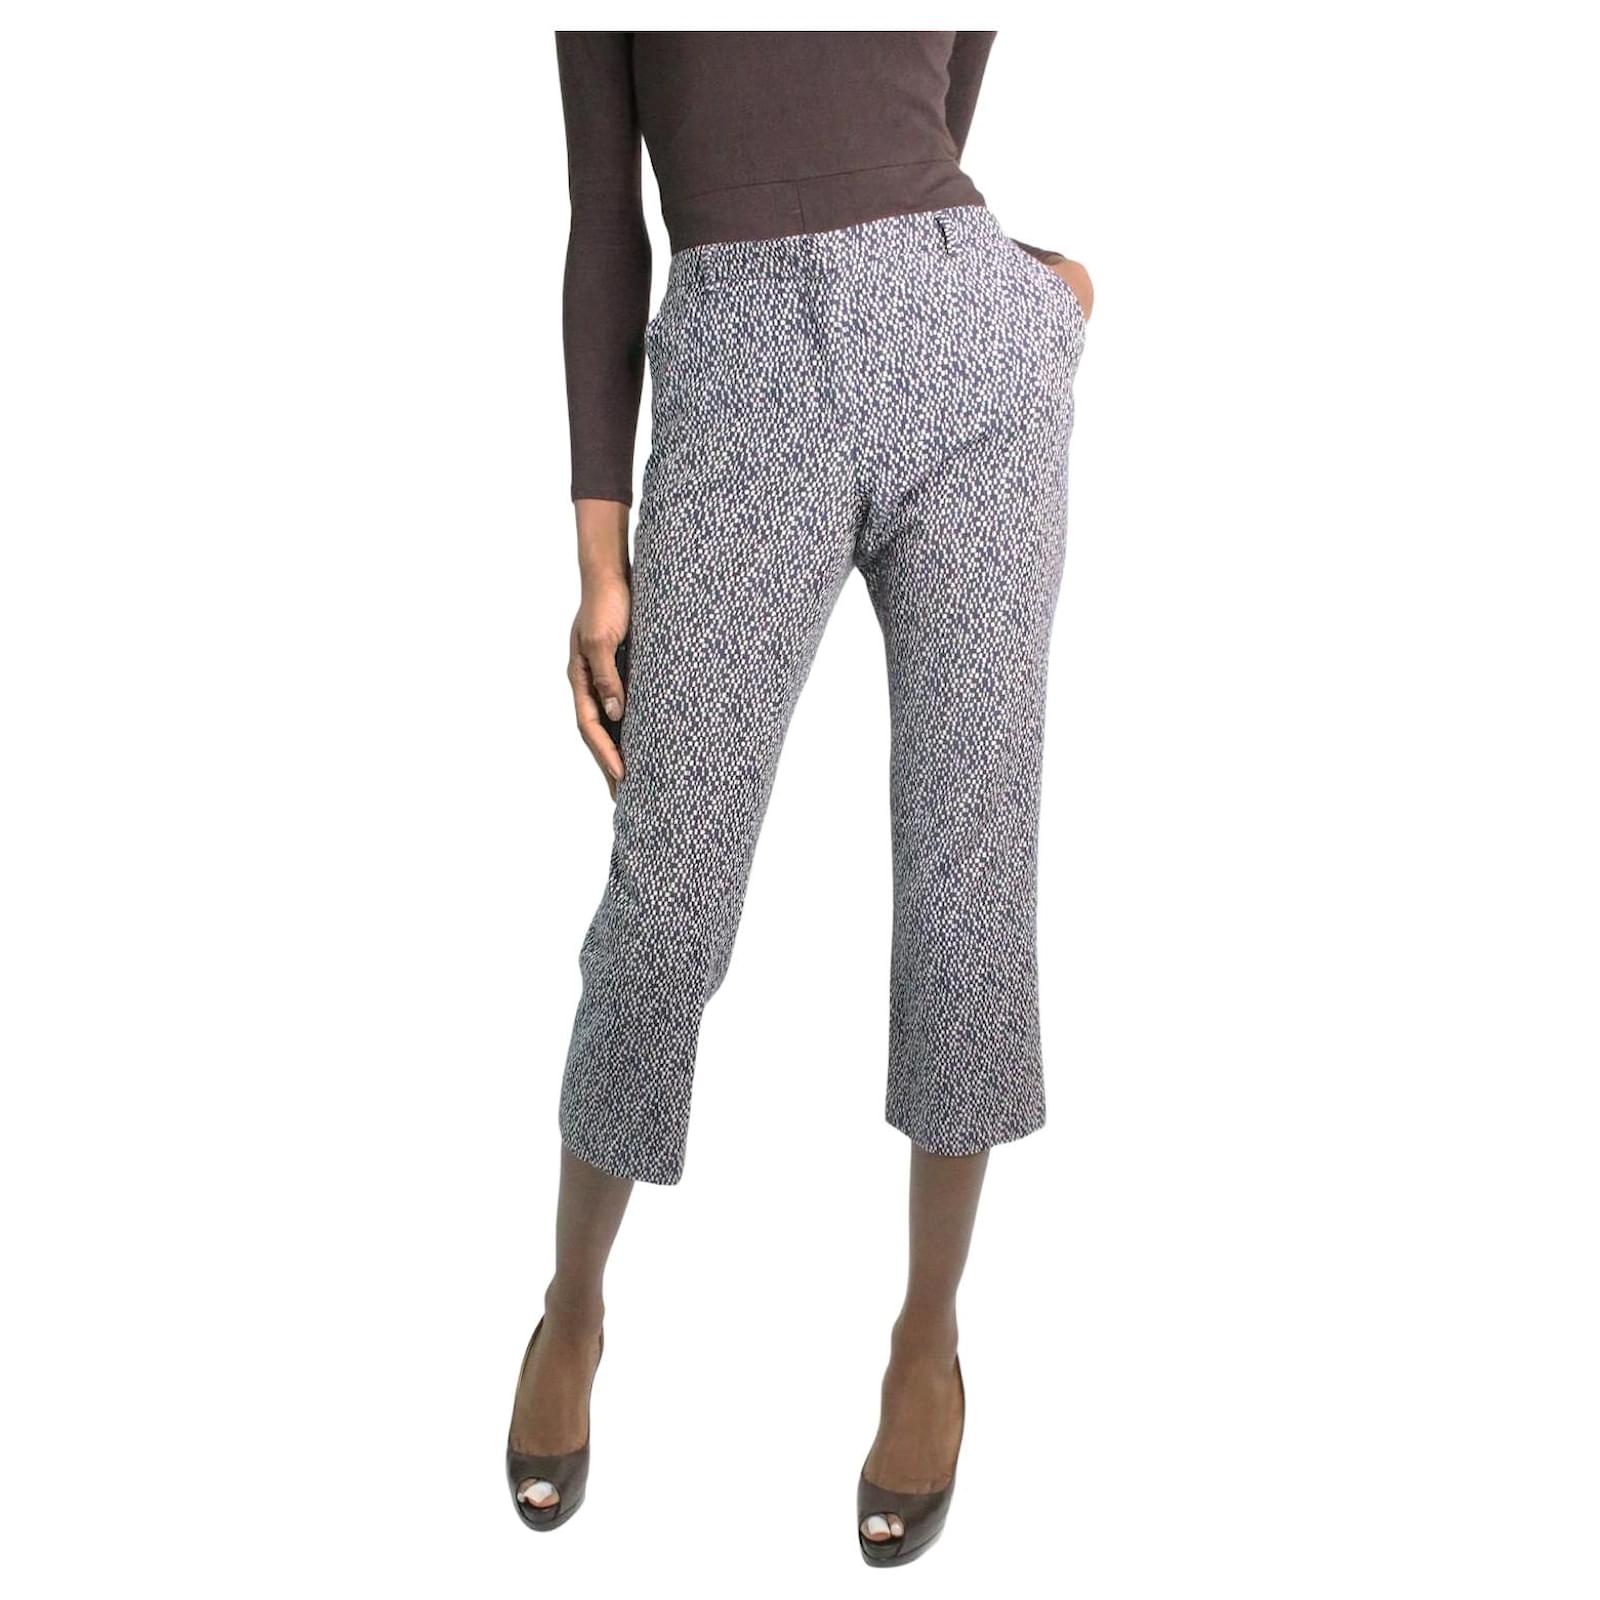 https://cdn1.jolicloset.com/imgr/full/2023/09/985453-1/weekend-max-mara-cotton-blue-printed-trousers-size-uk-10-pants-leggings.jpg